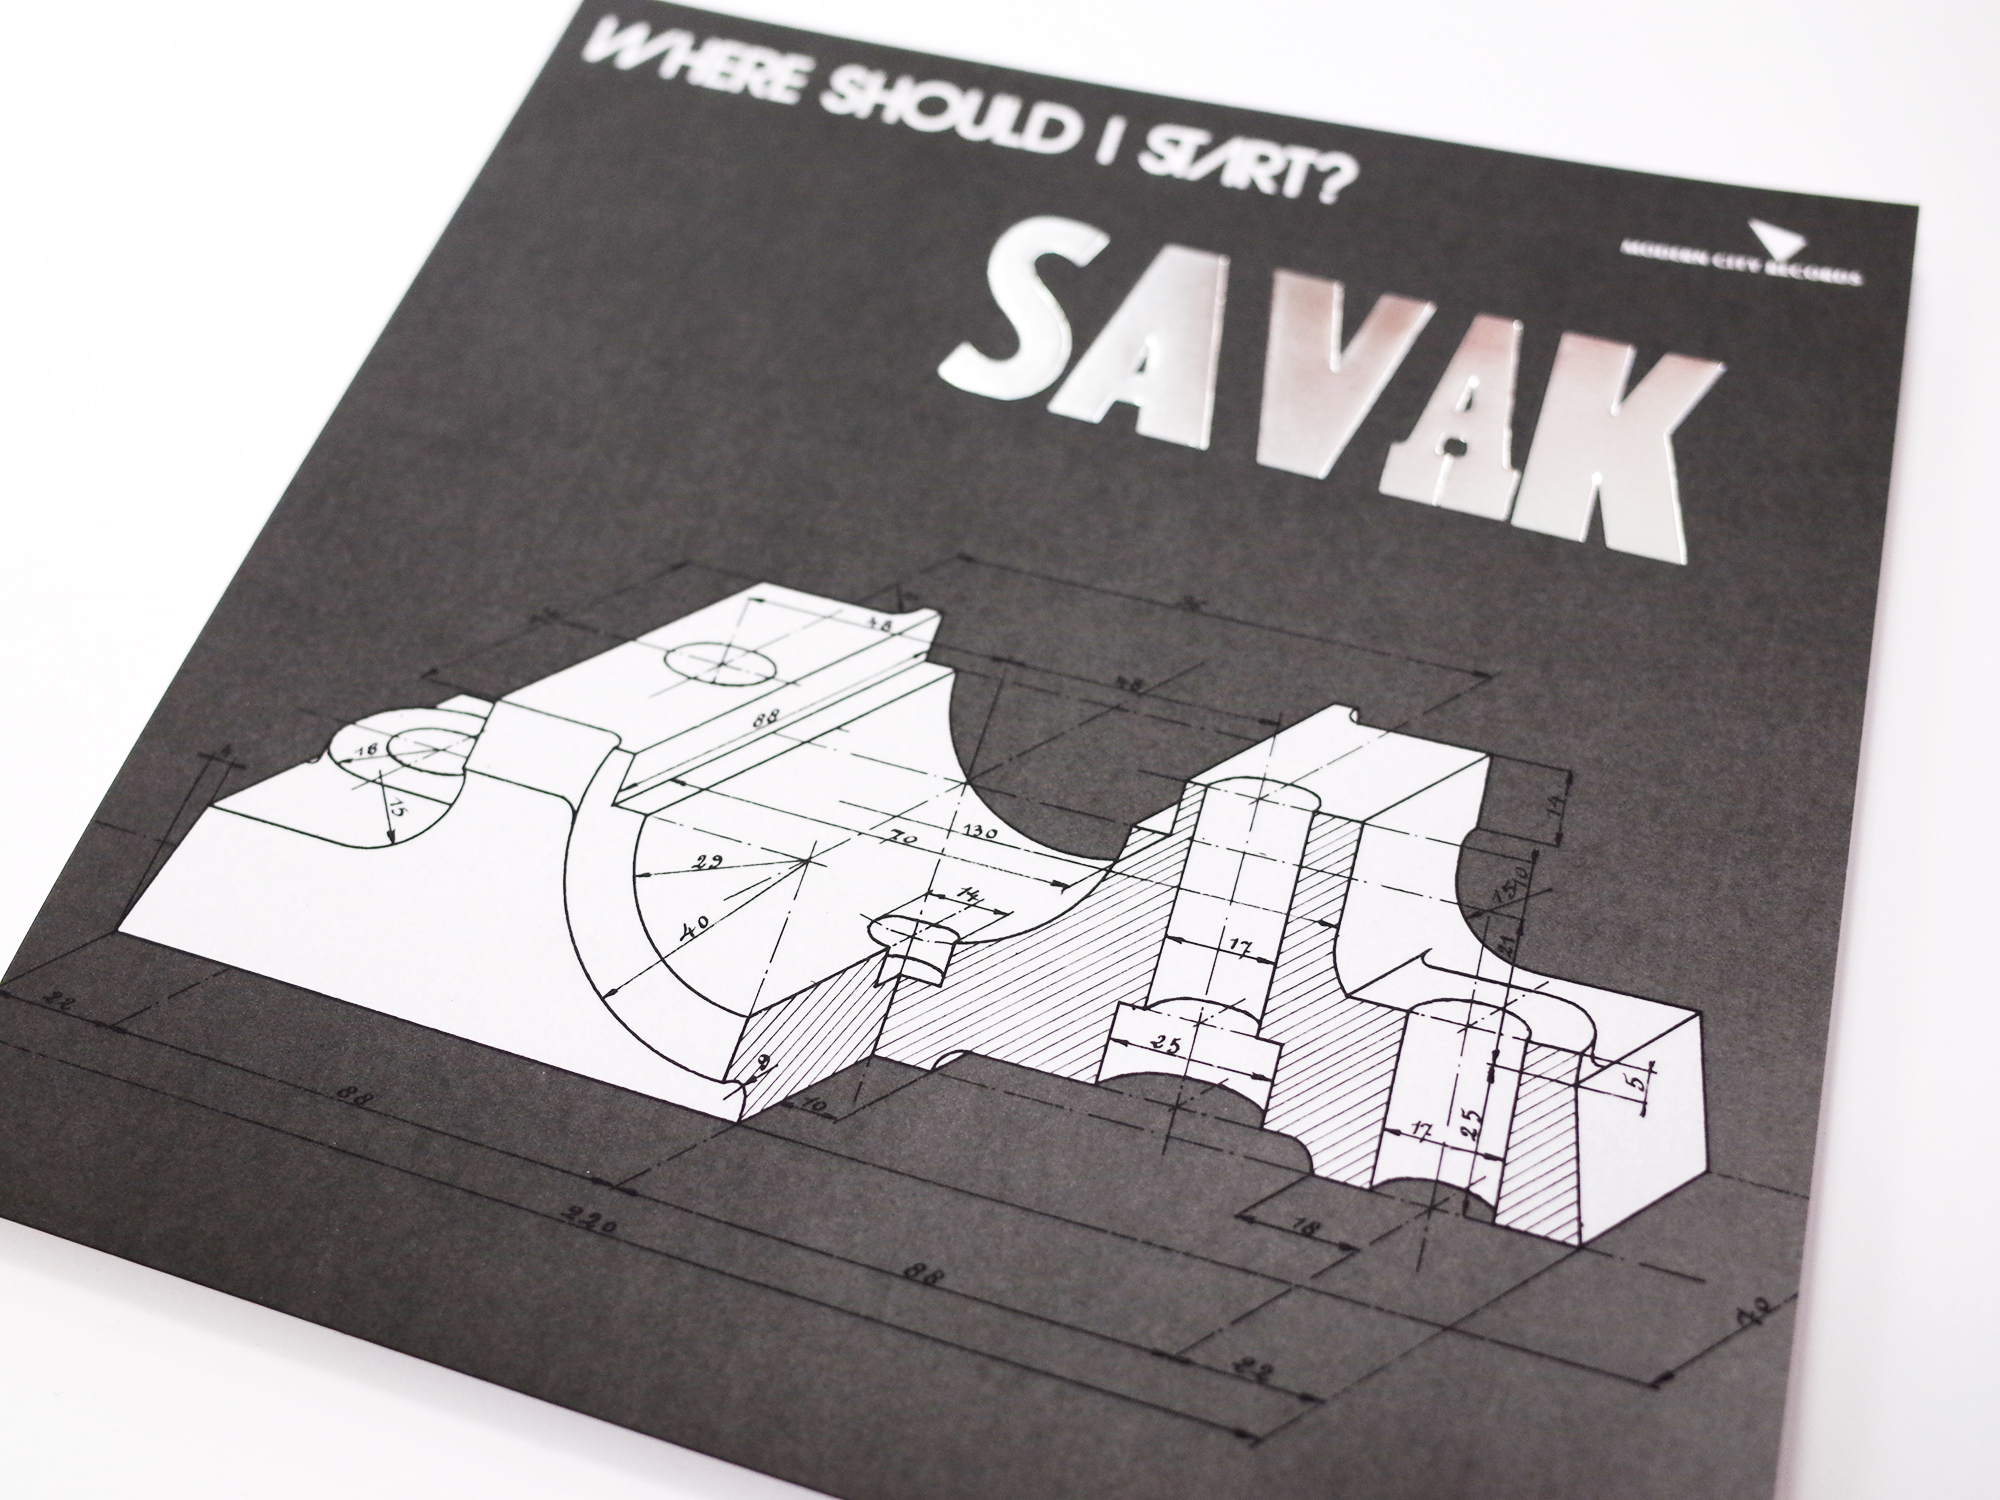 SAVAK - 45 tours - Where Should I Start